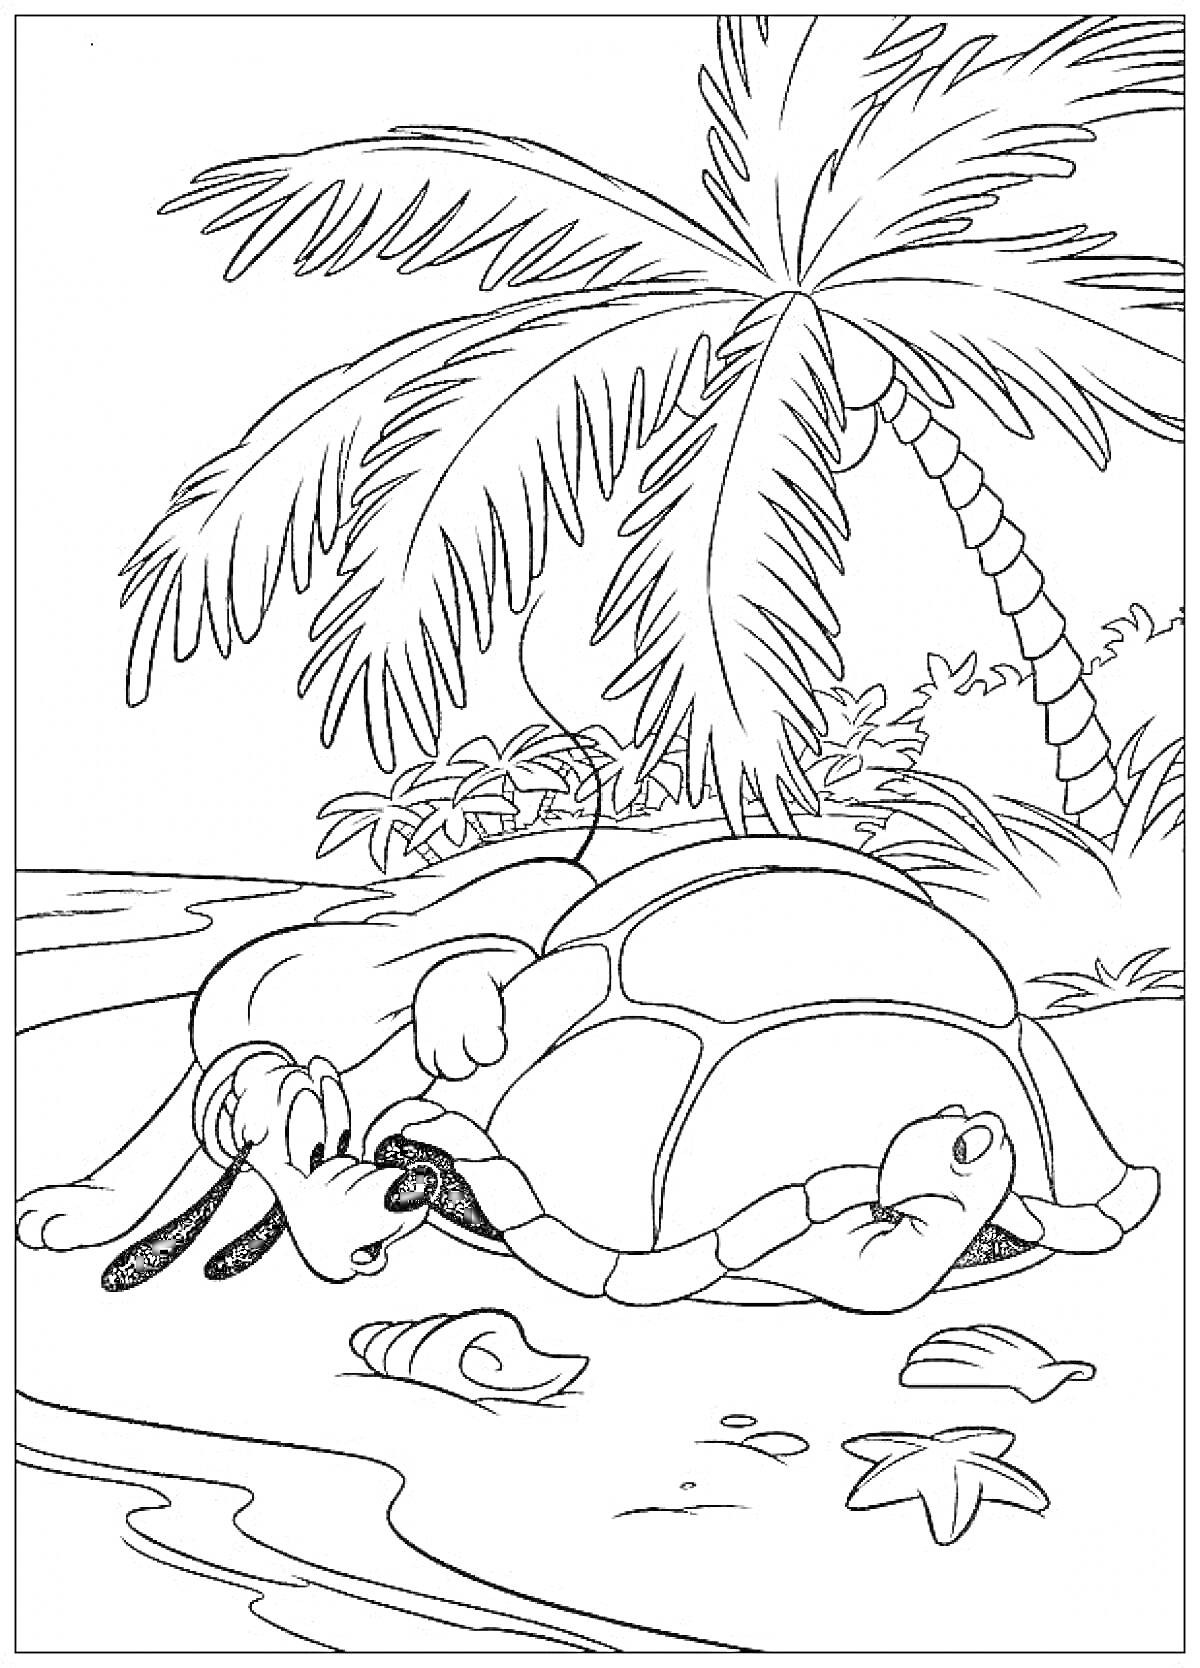 РаскраскаЧерепаха под пальмой на пляже. Черепаха, собака, море, пальма, ракушка и лист на песке